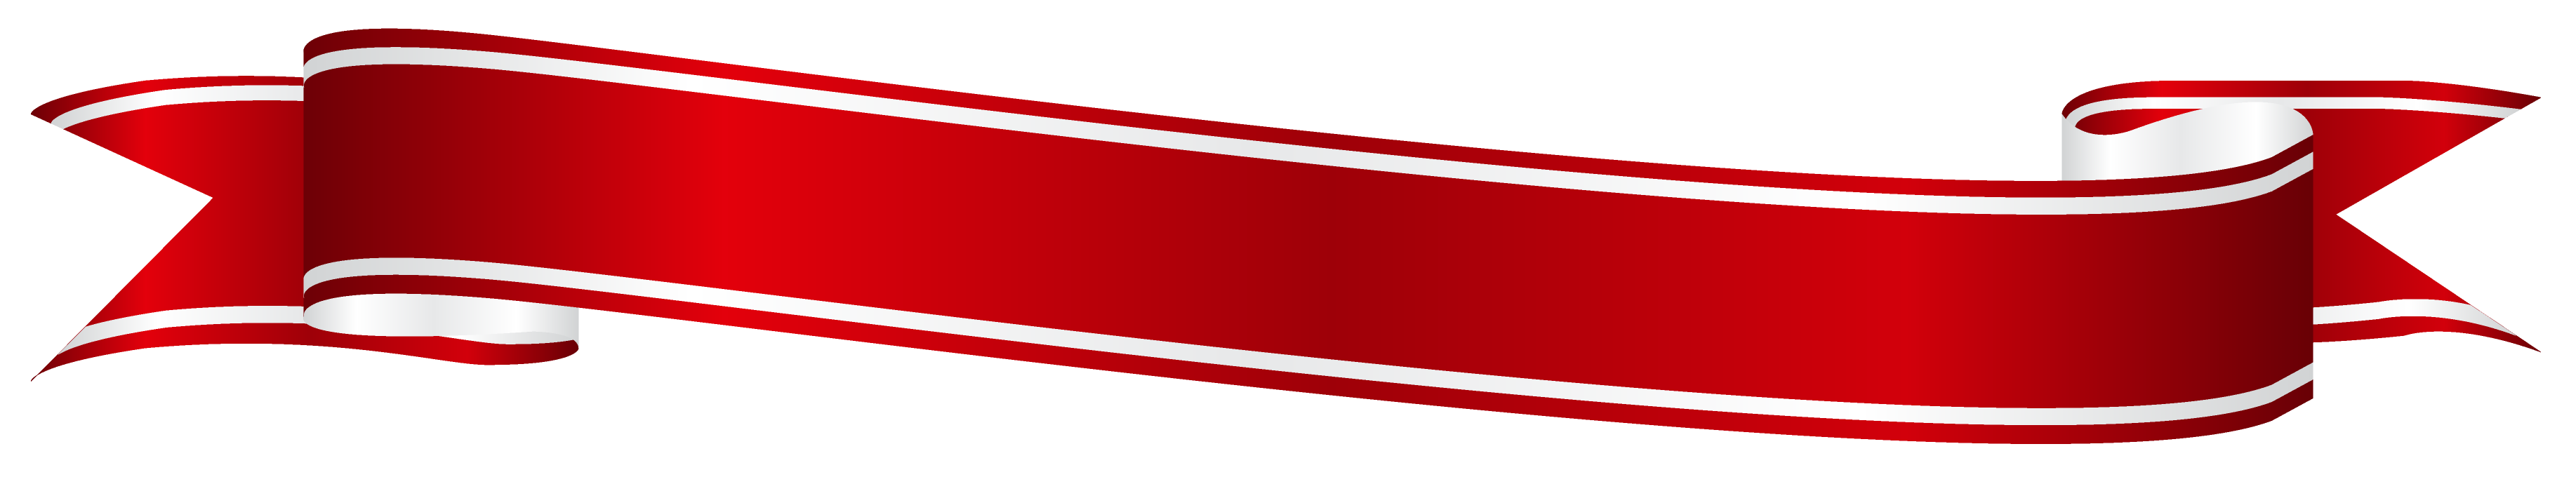 Header Red Ribbon Background PNG Image